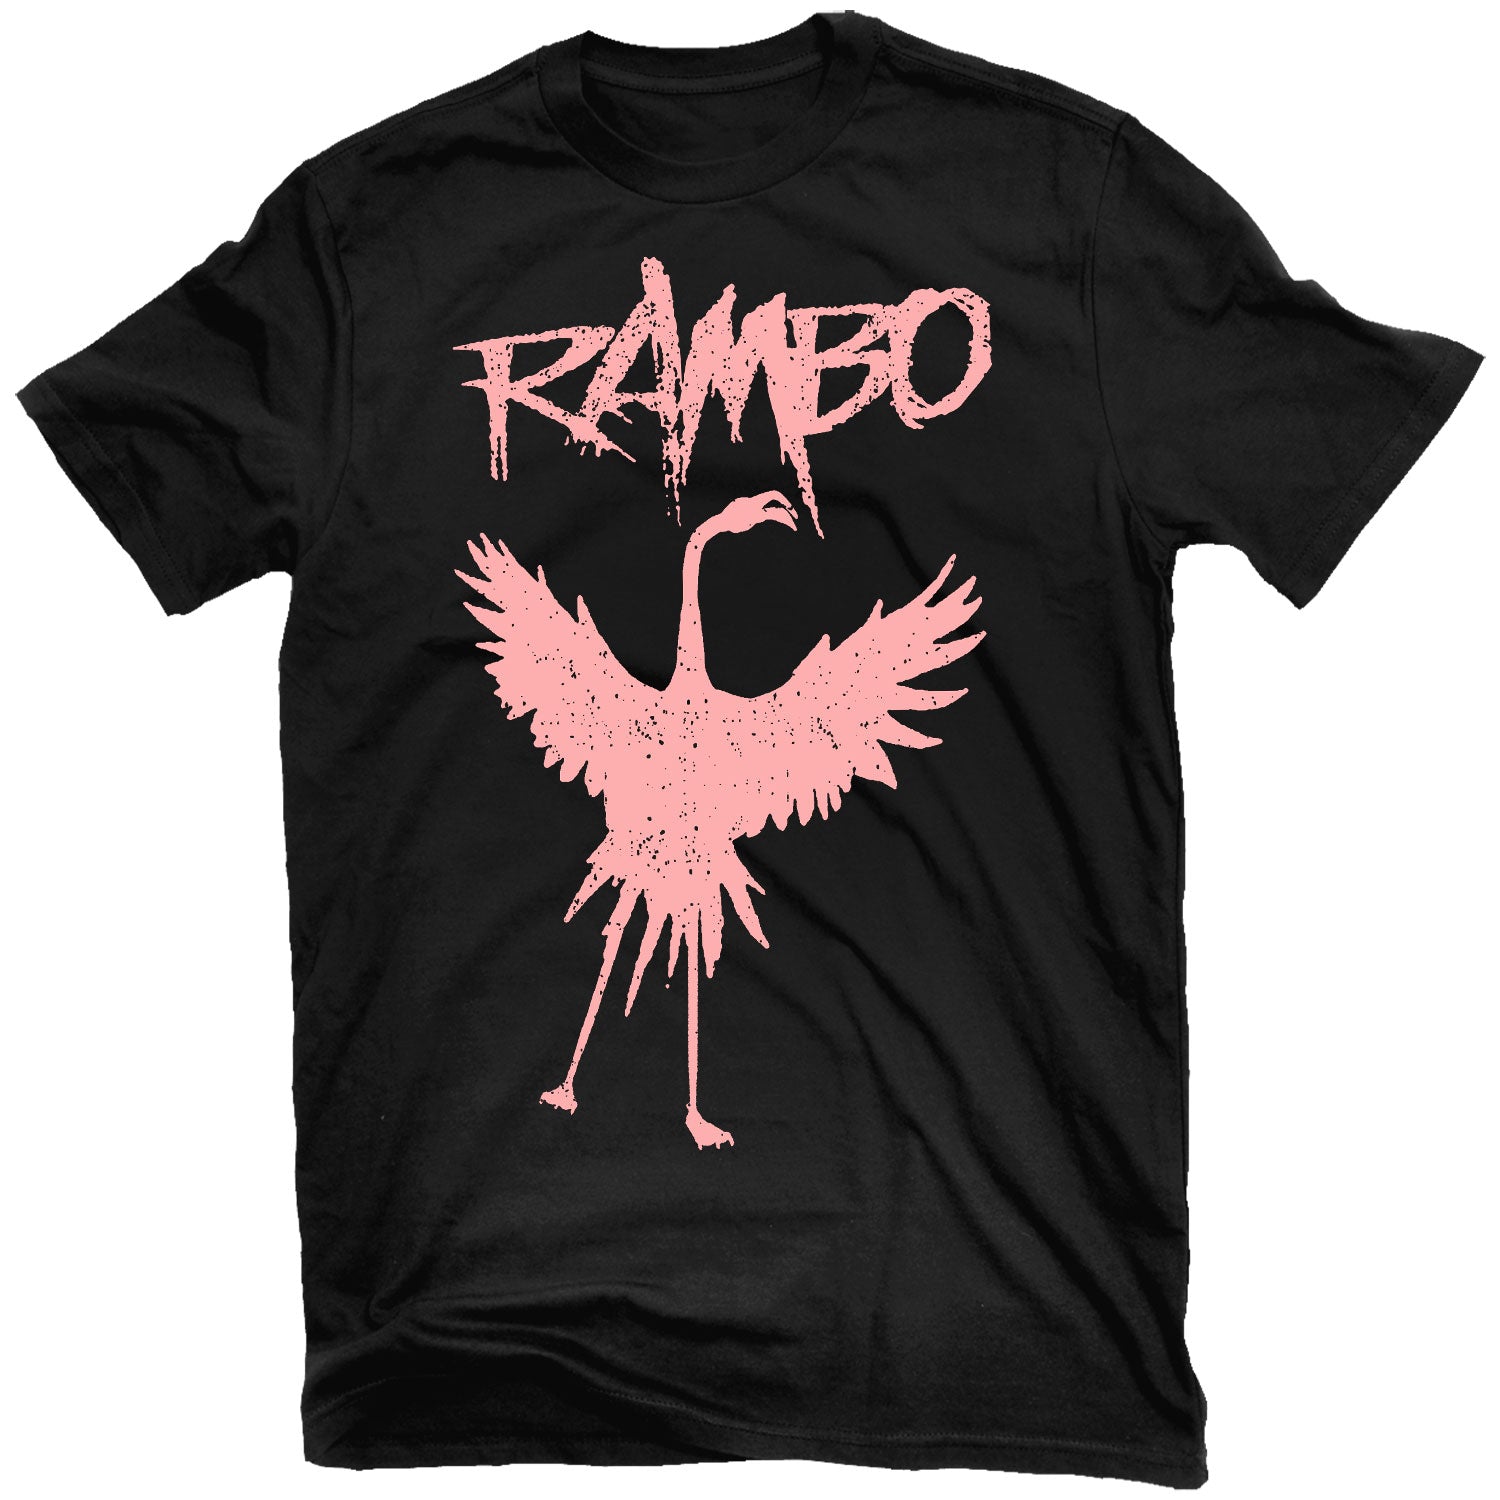 R.A.M.B.O. "Flamingo" T-Shirt